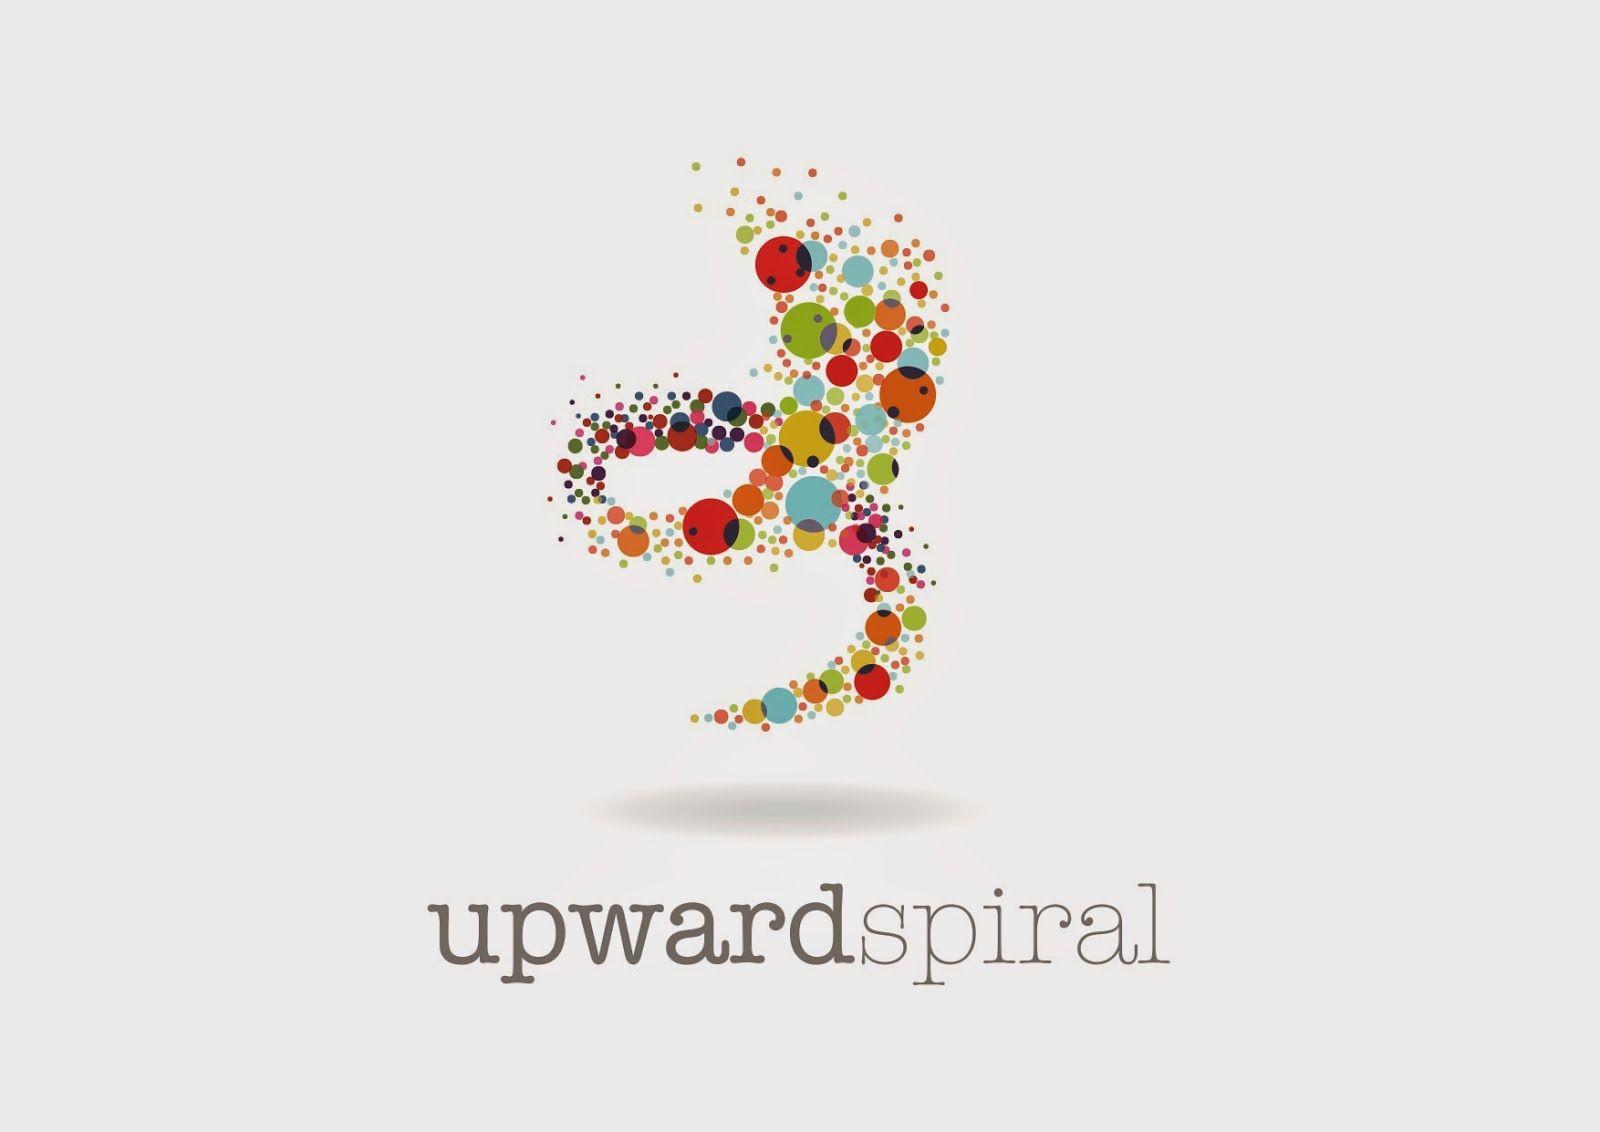 Upward Spiral Logo - Siraaj Ryklief illustration & design: Upward Spiral